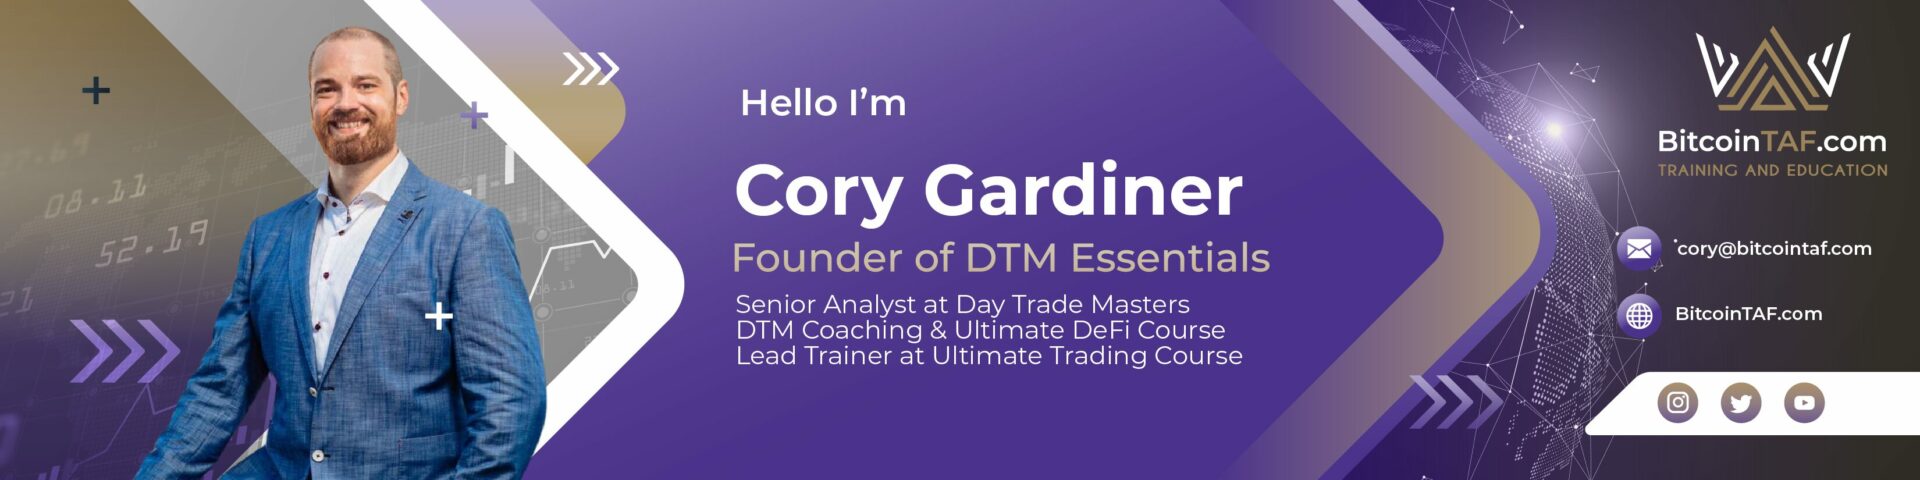 Cory Gardiner, Day Trade Masters Analyst at BitcoinTAF.com